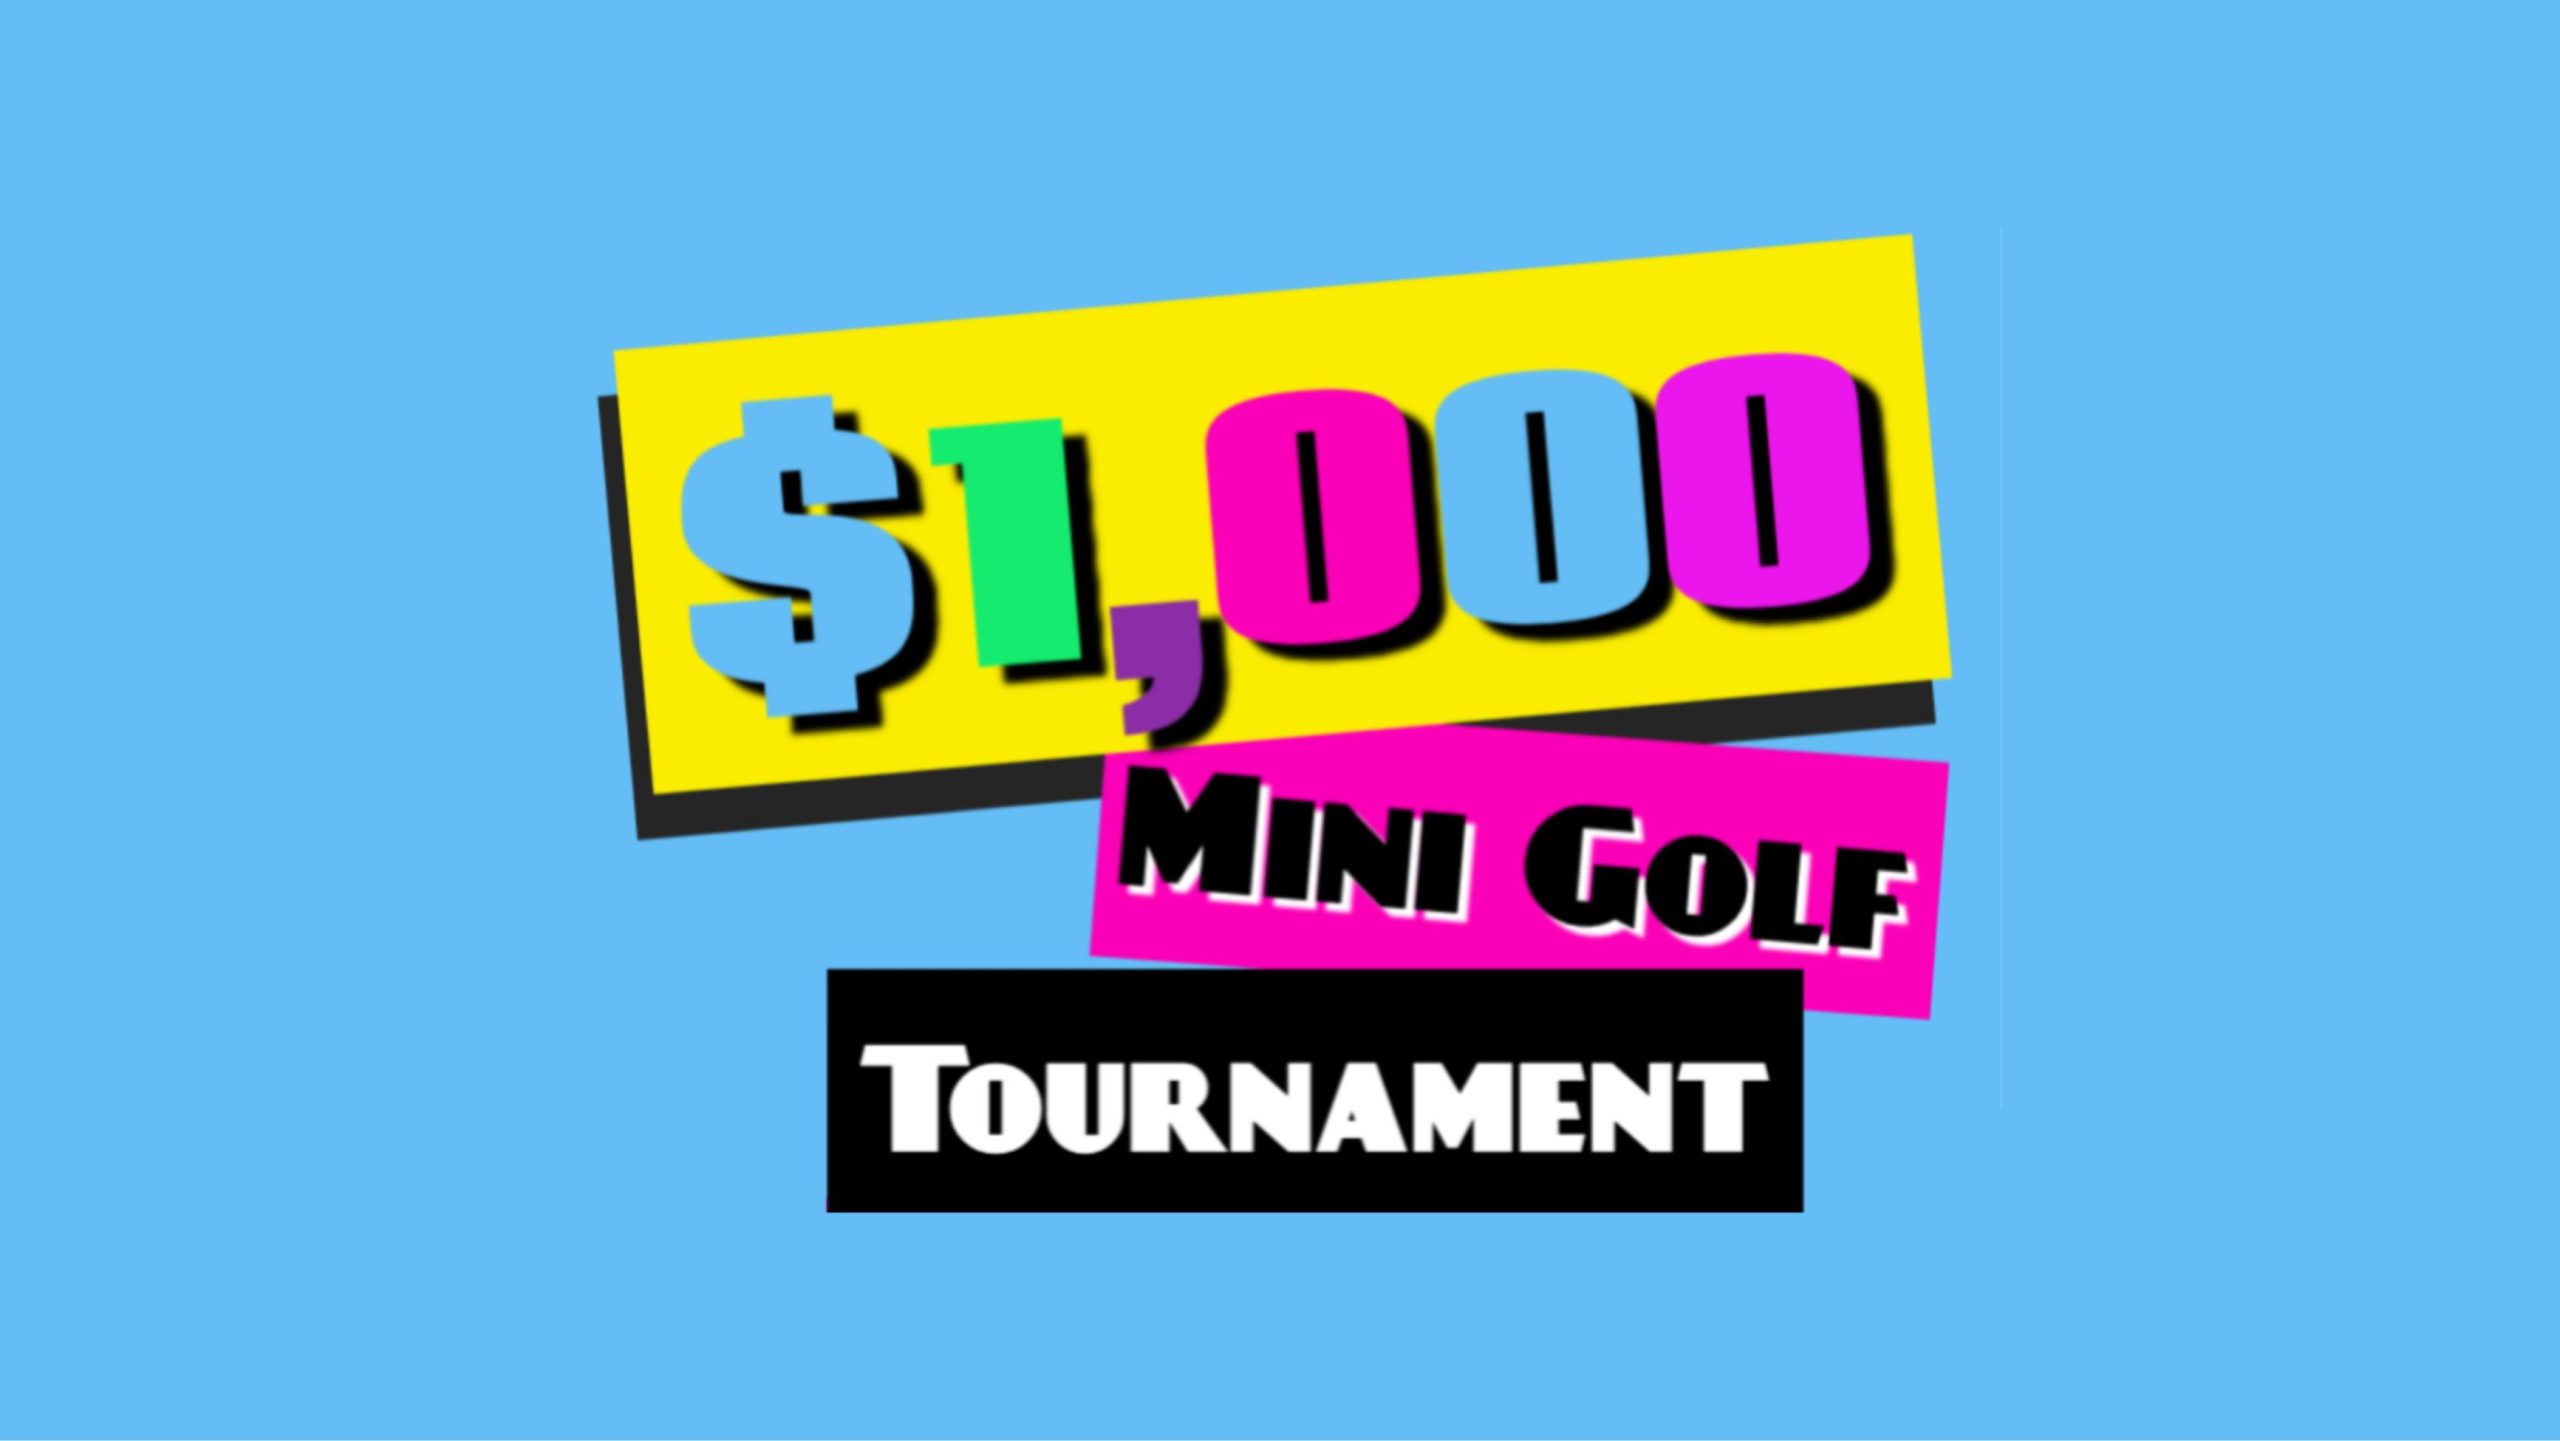 4th Annual $1,000 Mini Golf Tournament